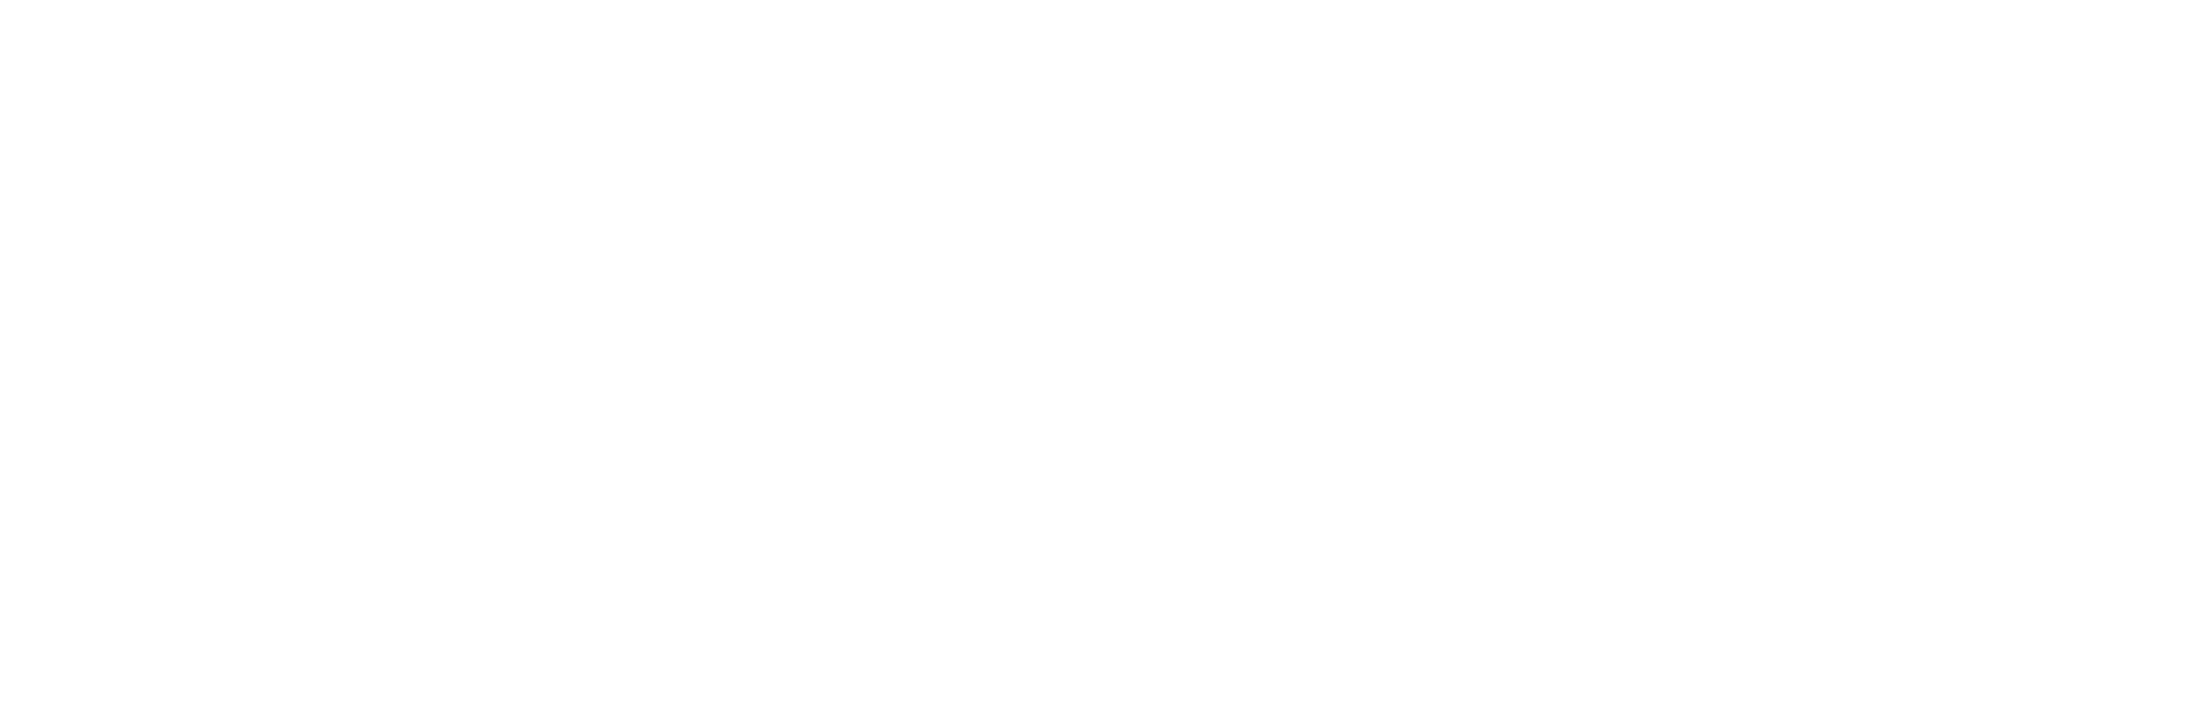 Telefónica company logo on a black background.